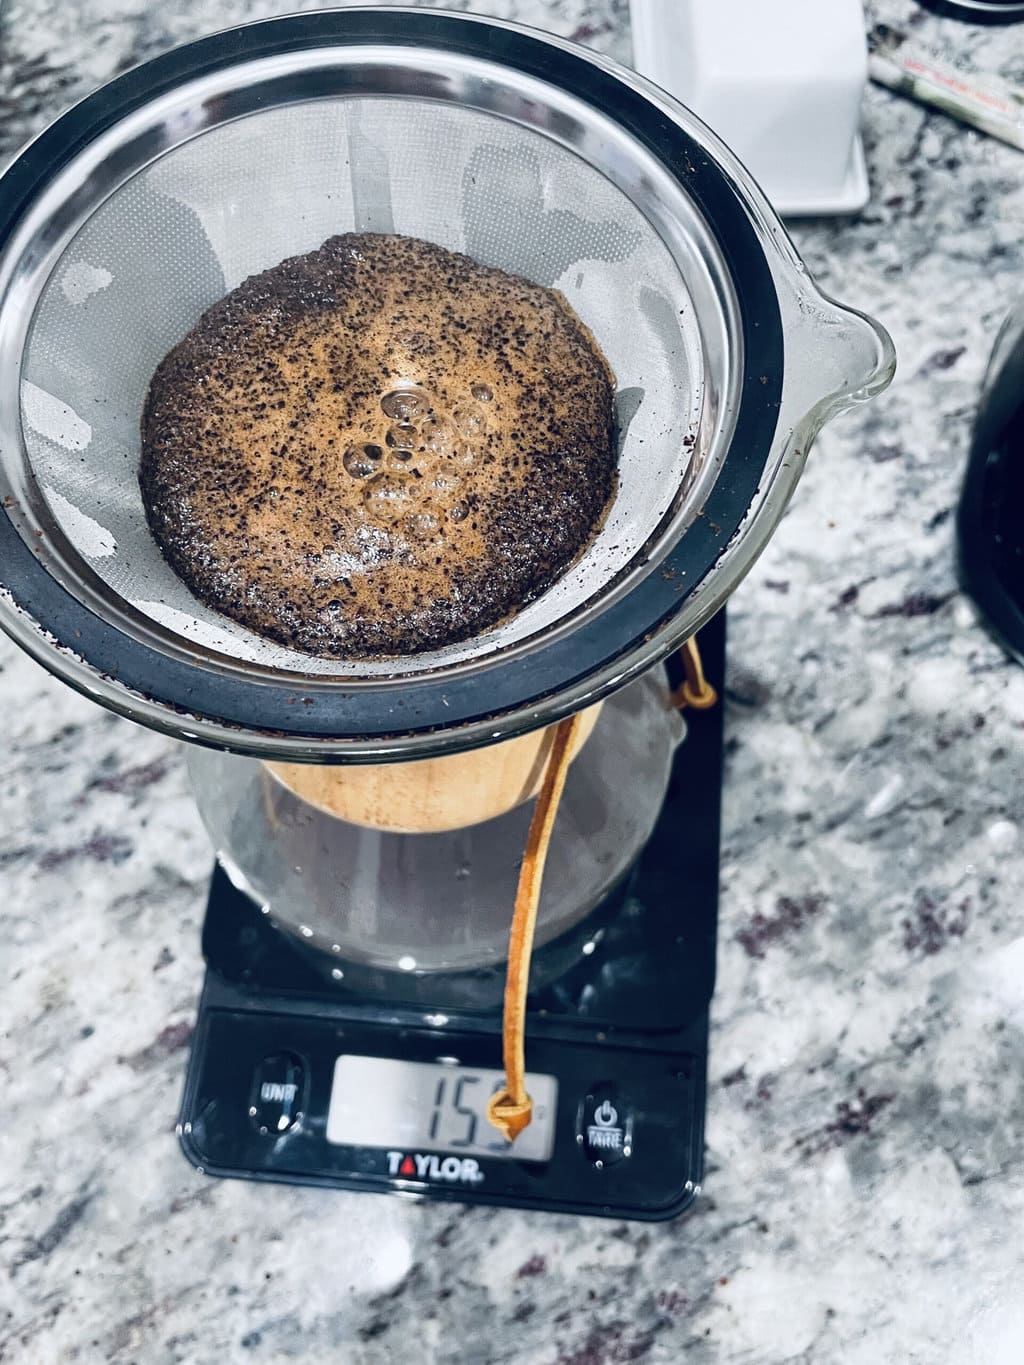 filtering coffee in Chemex coffee maker